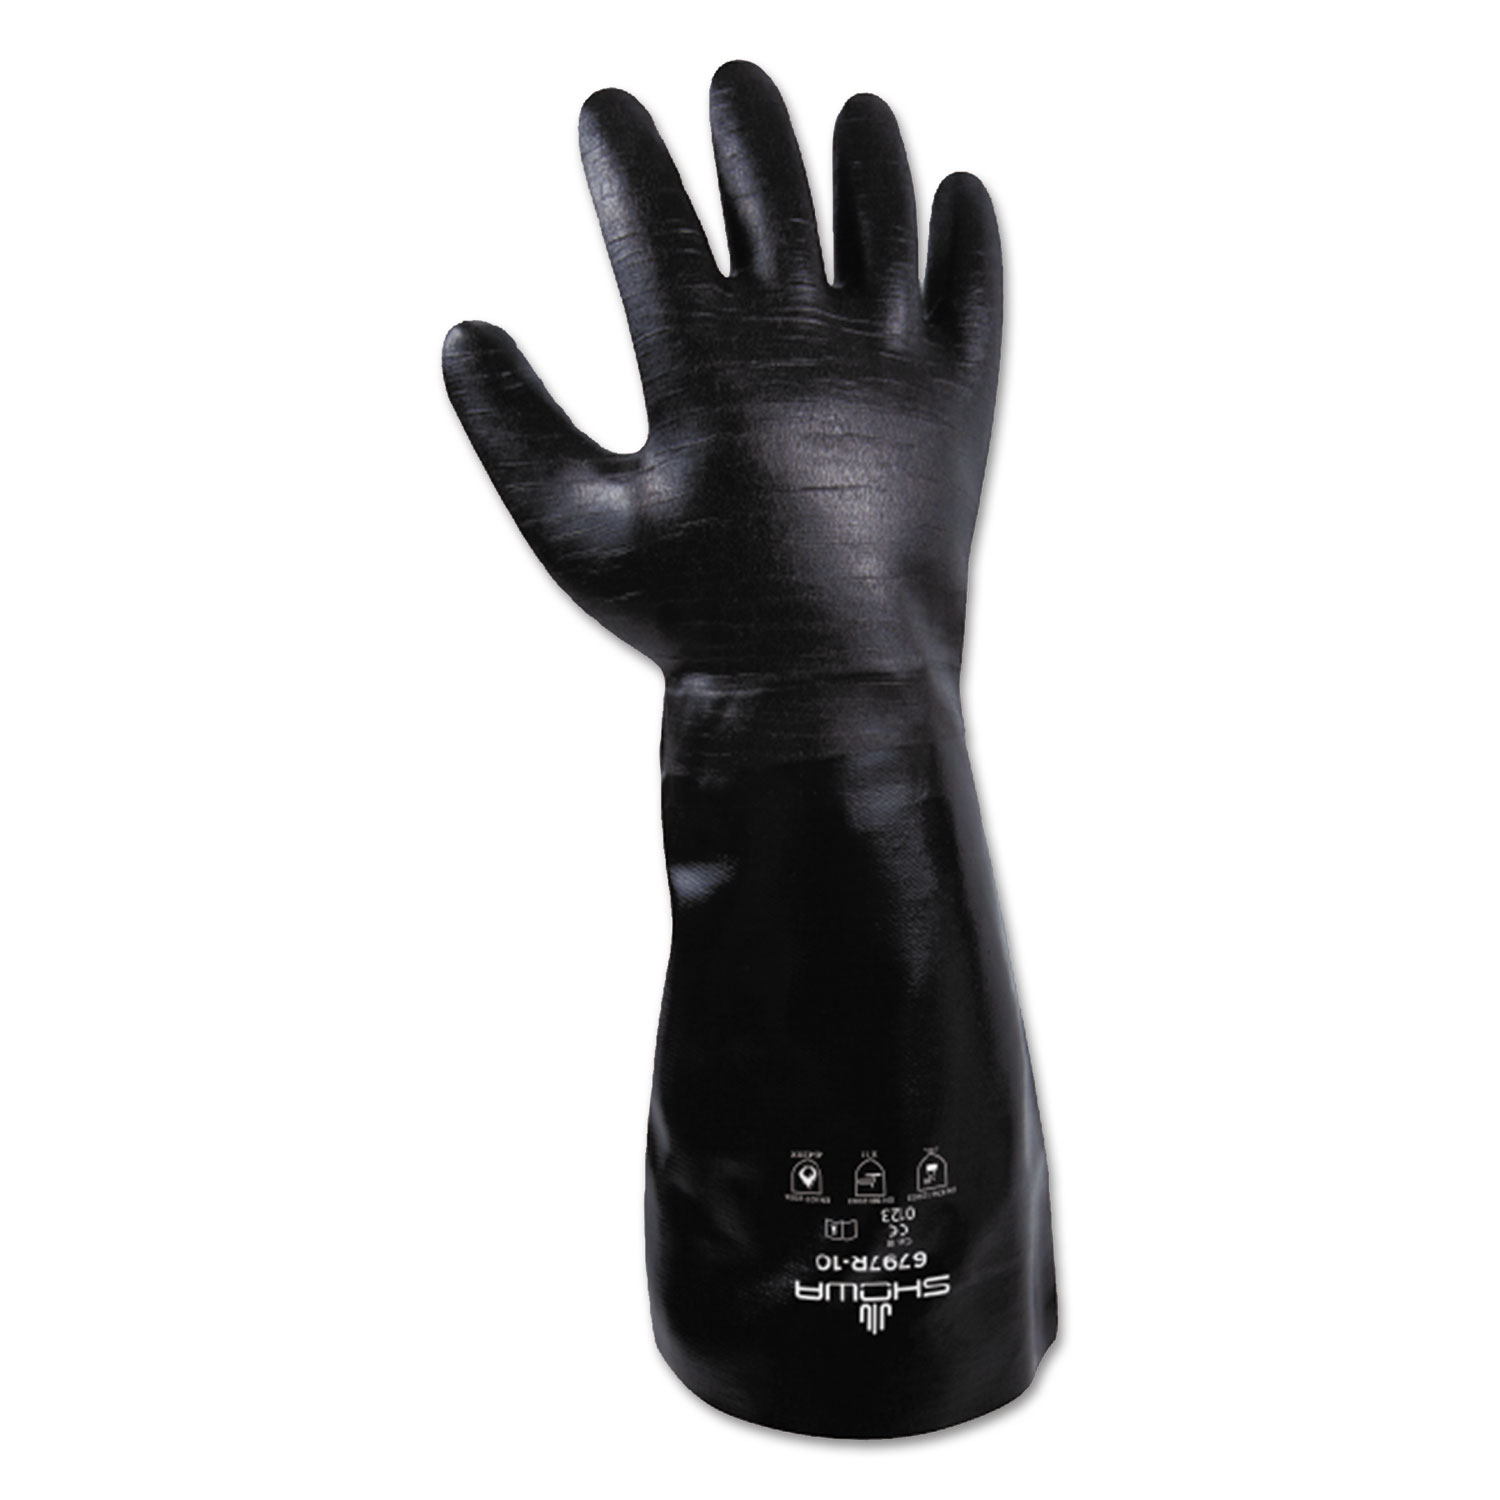  SHOWA 6797R-10 Neoprene Elbow-Length Gauntlet Gloves, Black, Large, 1 Dozen (BSM6797R10) 